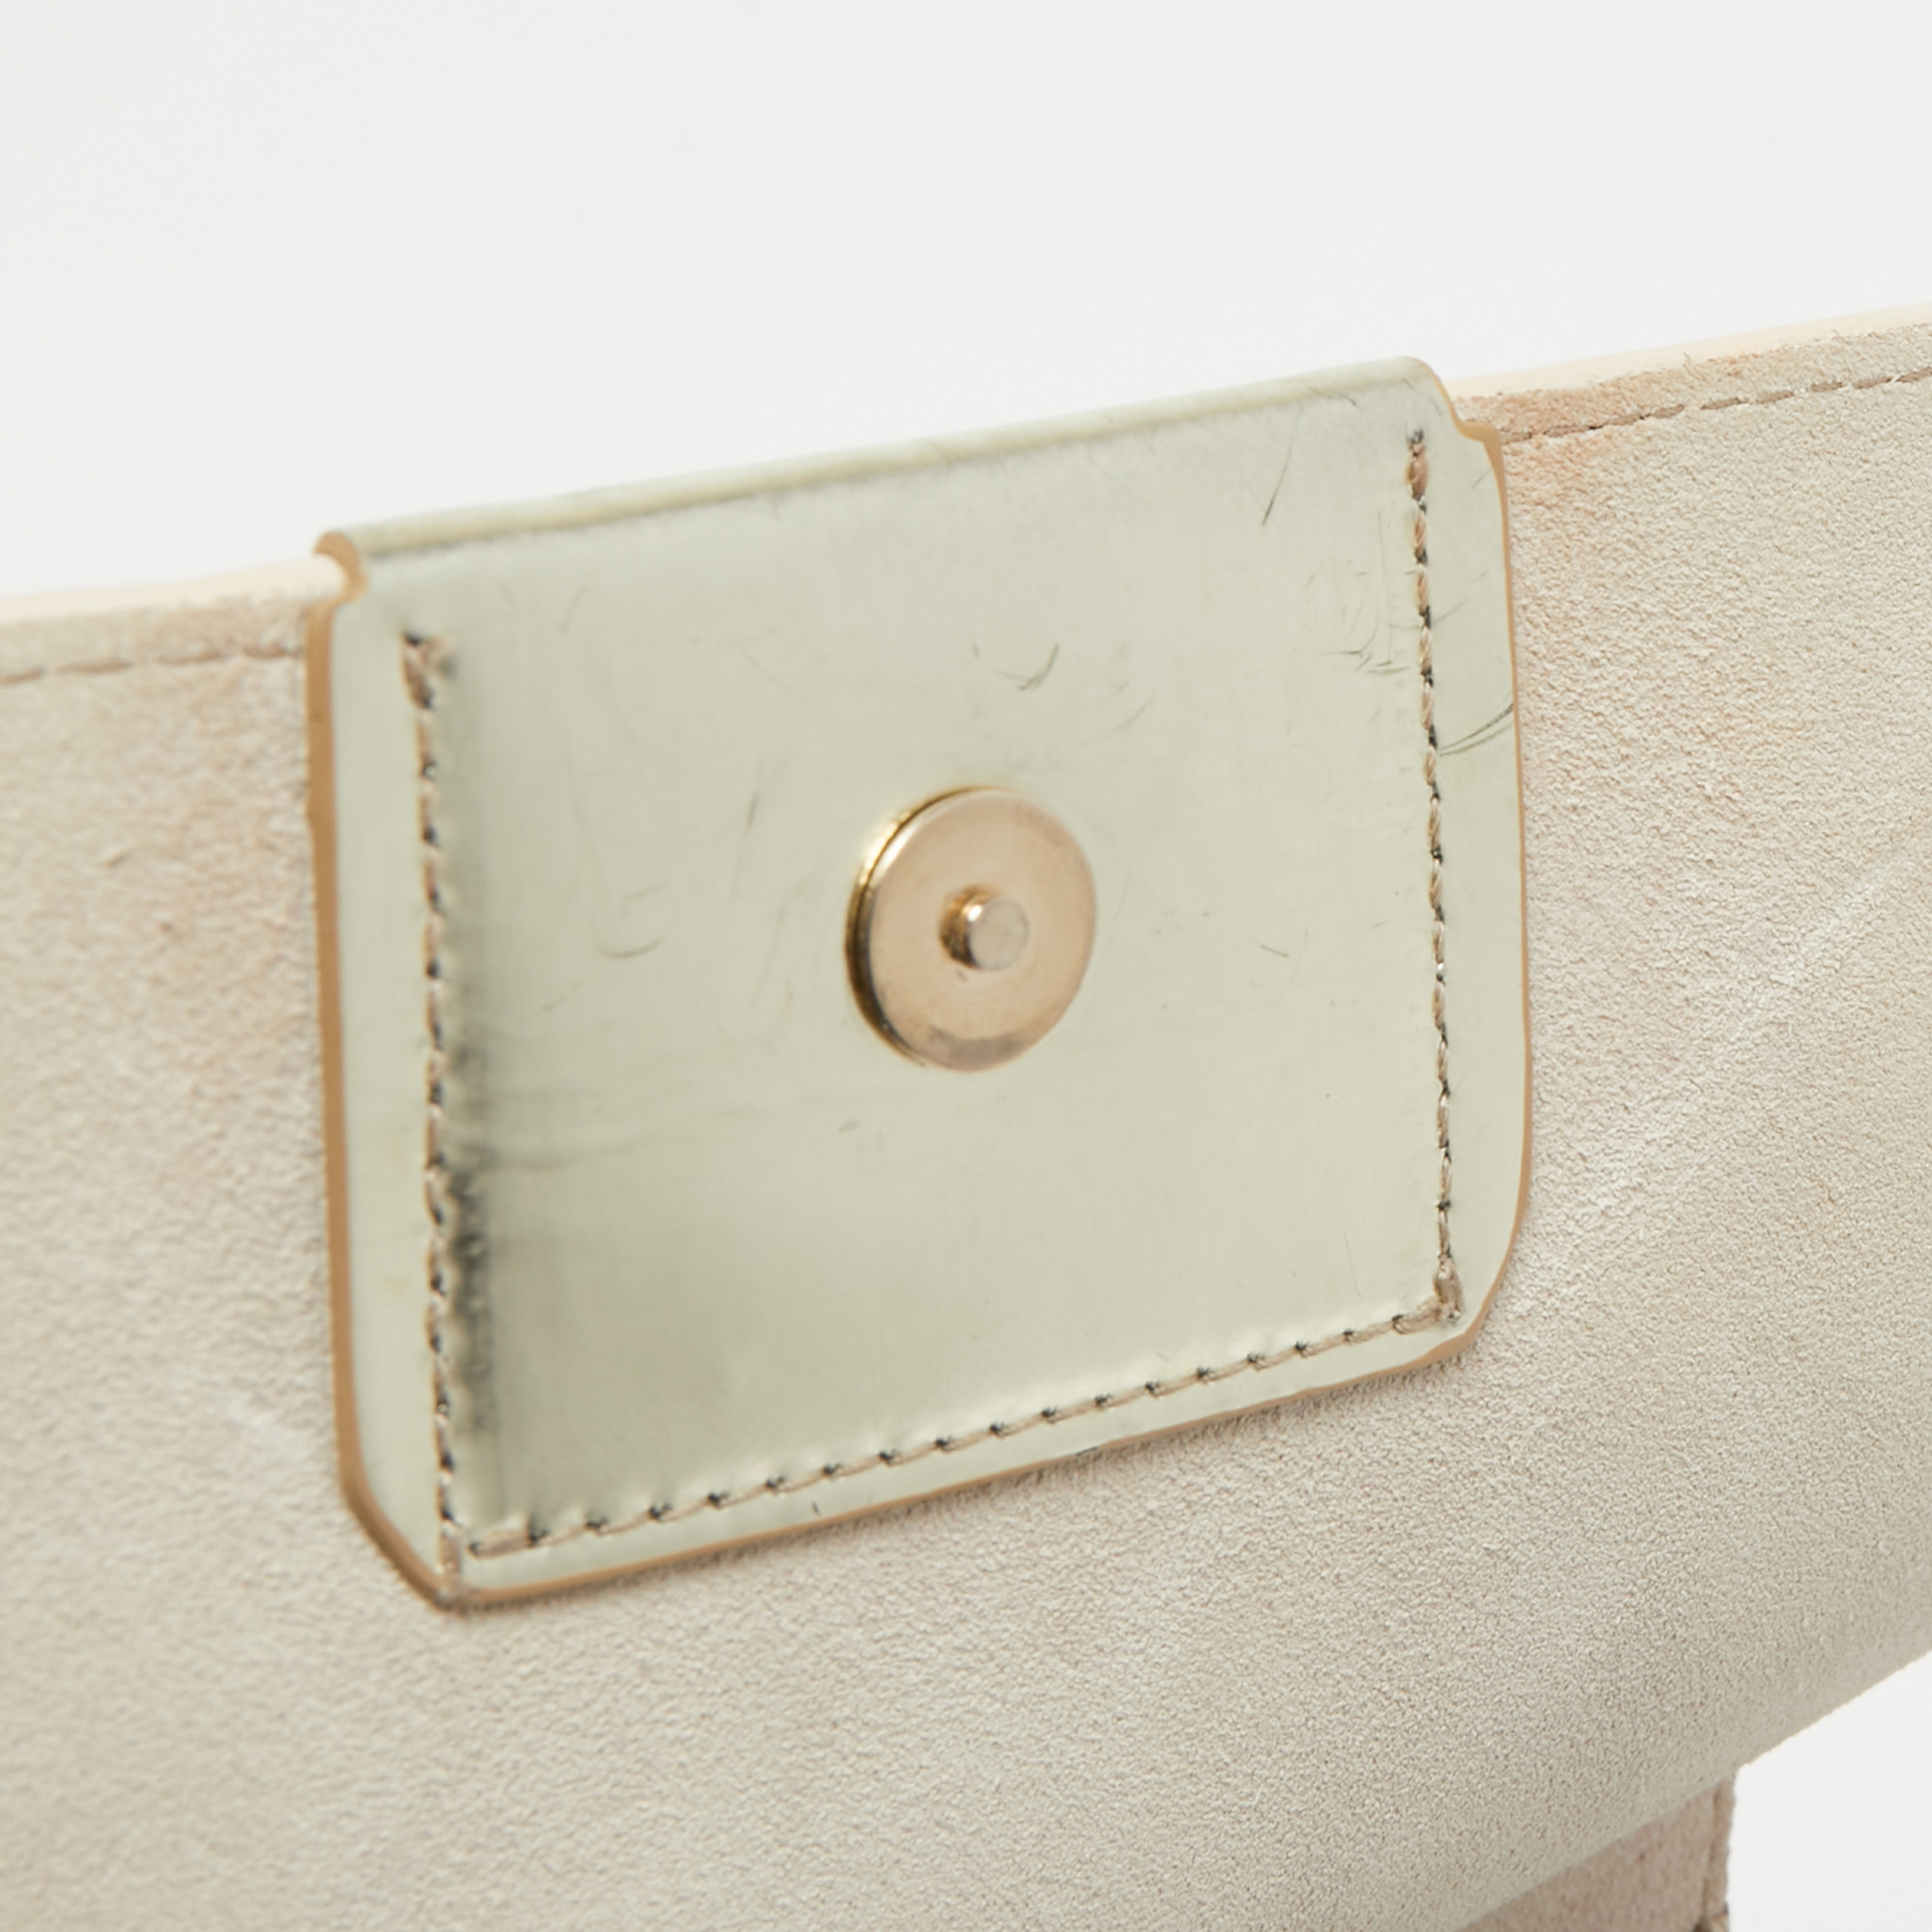 Furla Gold/Cream Leather And Python Embossed Leather Shoulder Bag